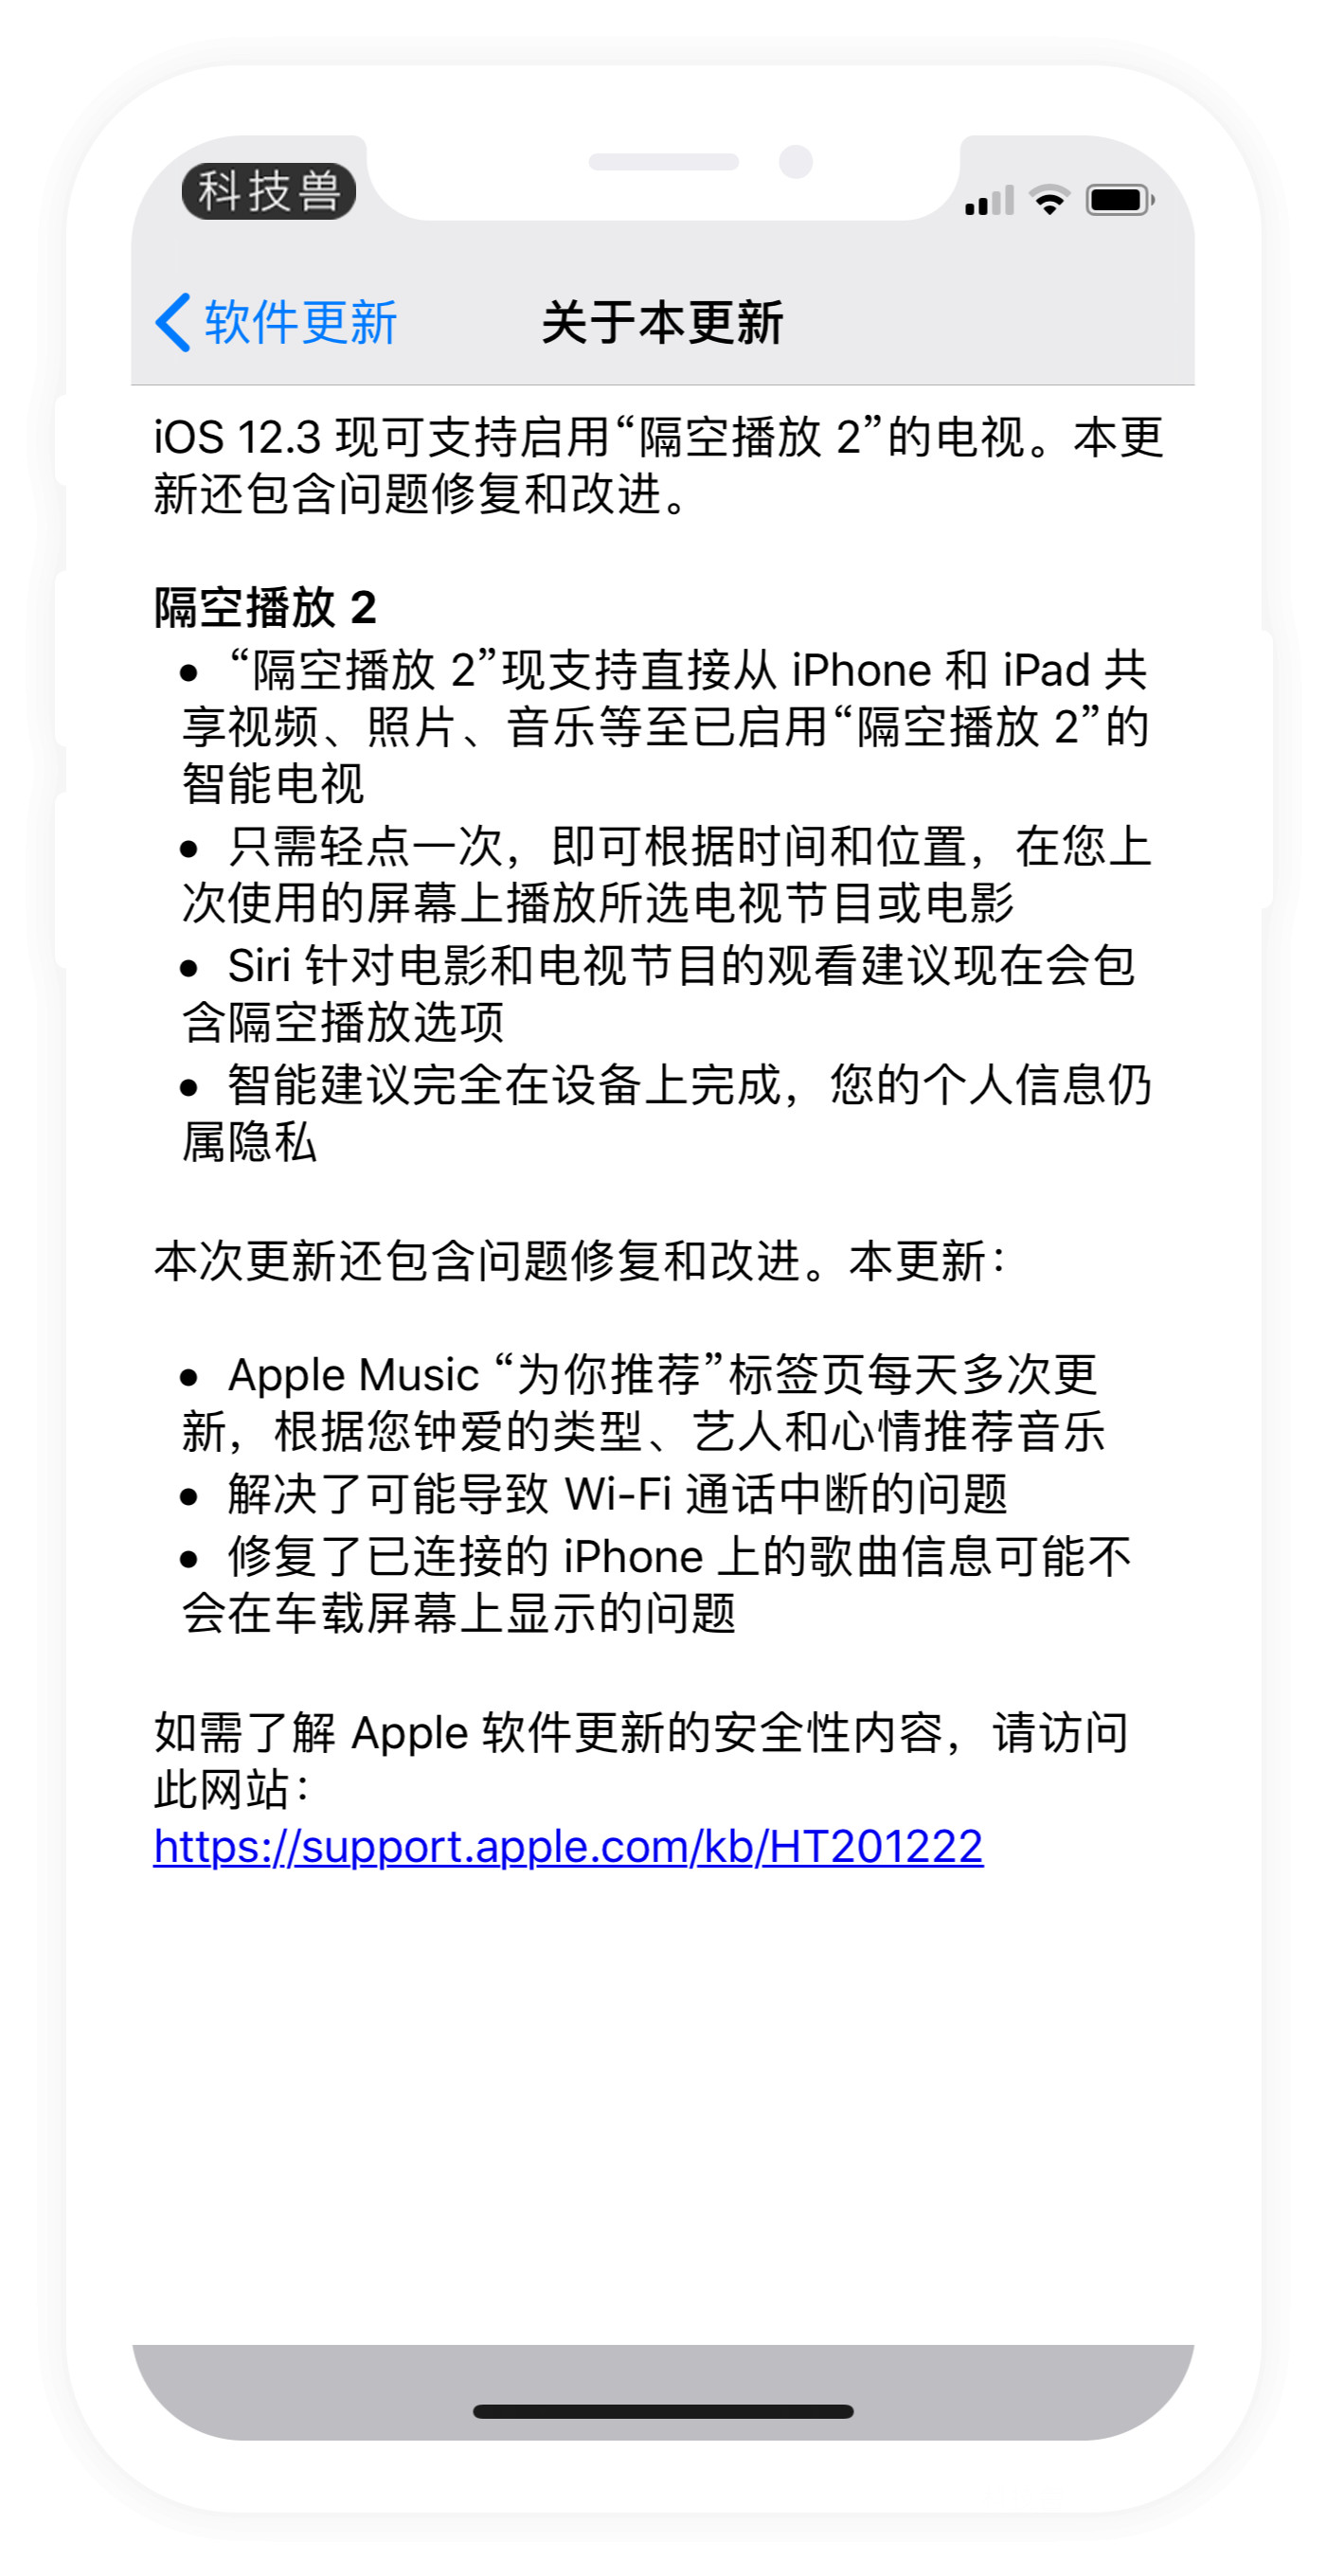 iOS 12.3 正式版发布，详细更新建议